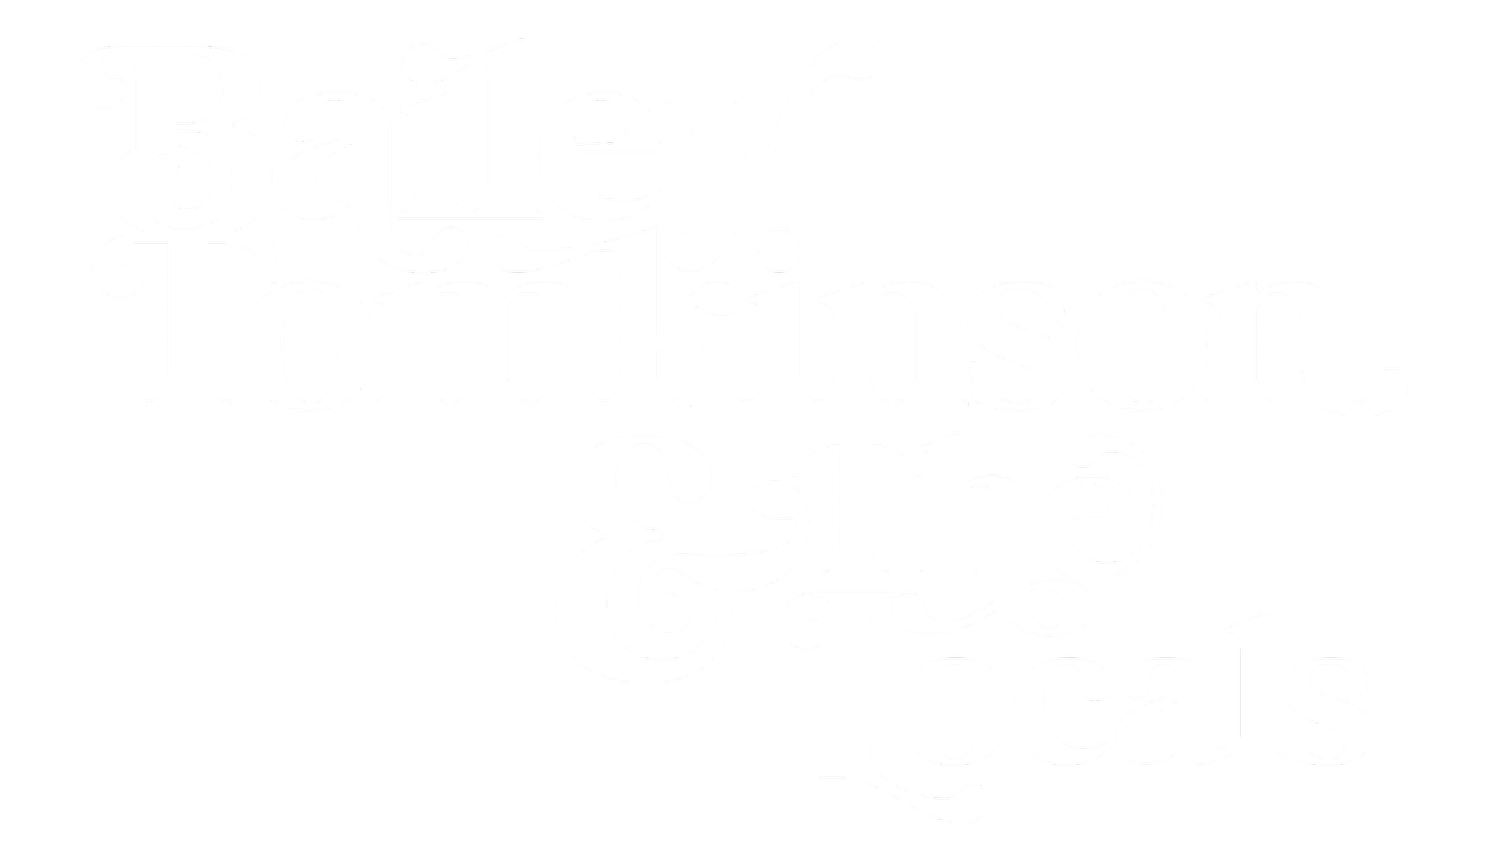 Bailey Tomkinson & The Locals